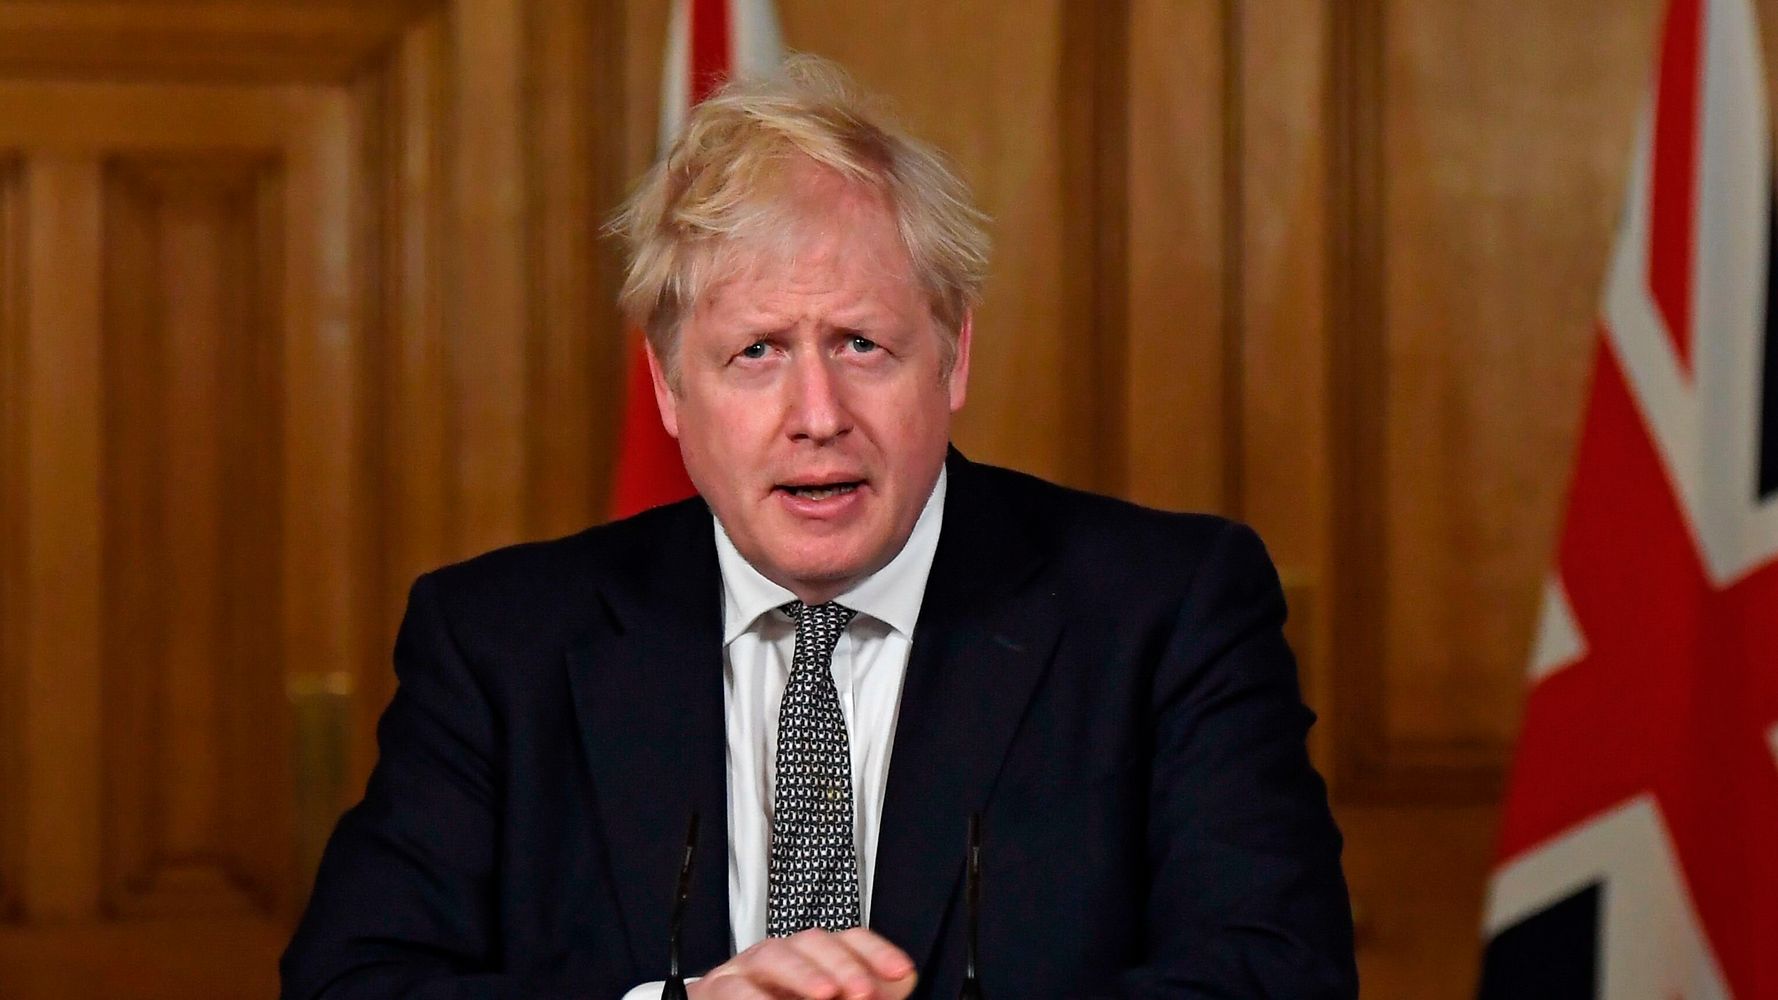 England To Go Into Second Lockdown From Thursday, Boris Johnson Confirms